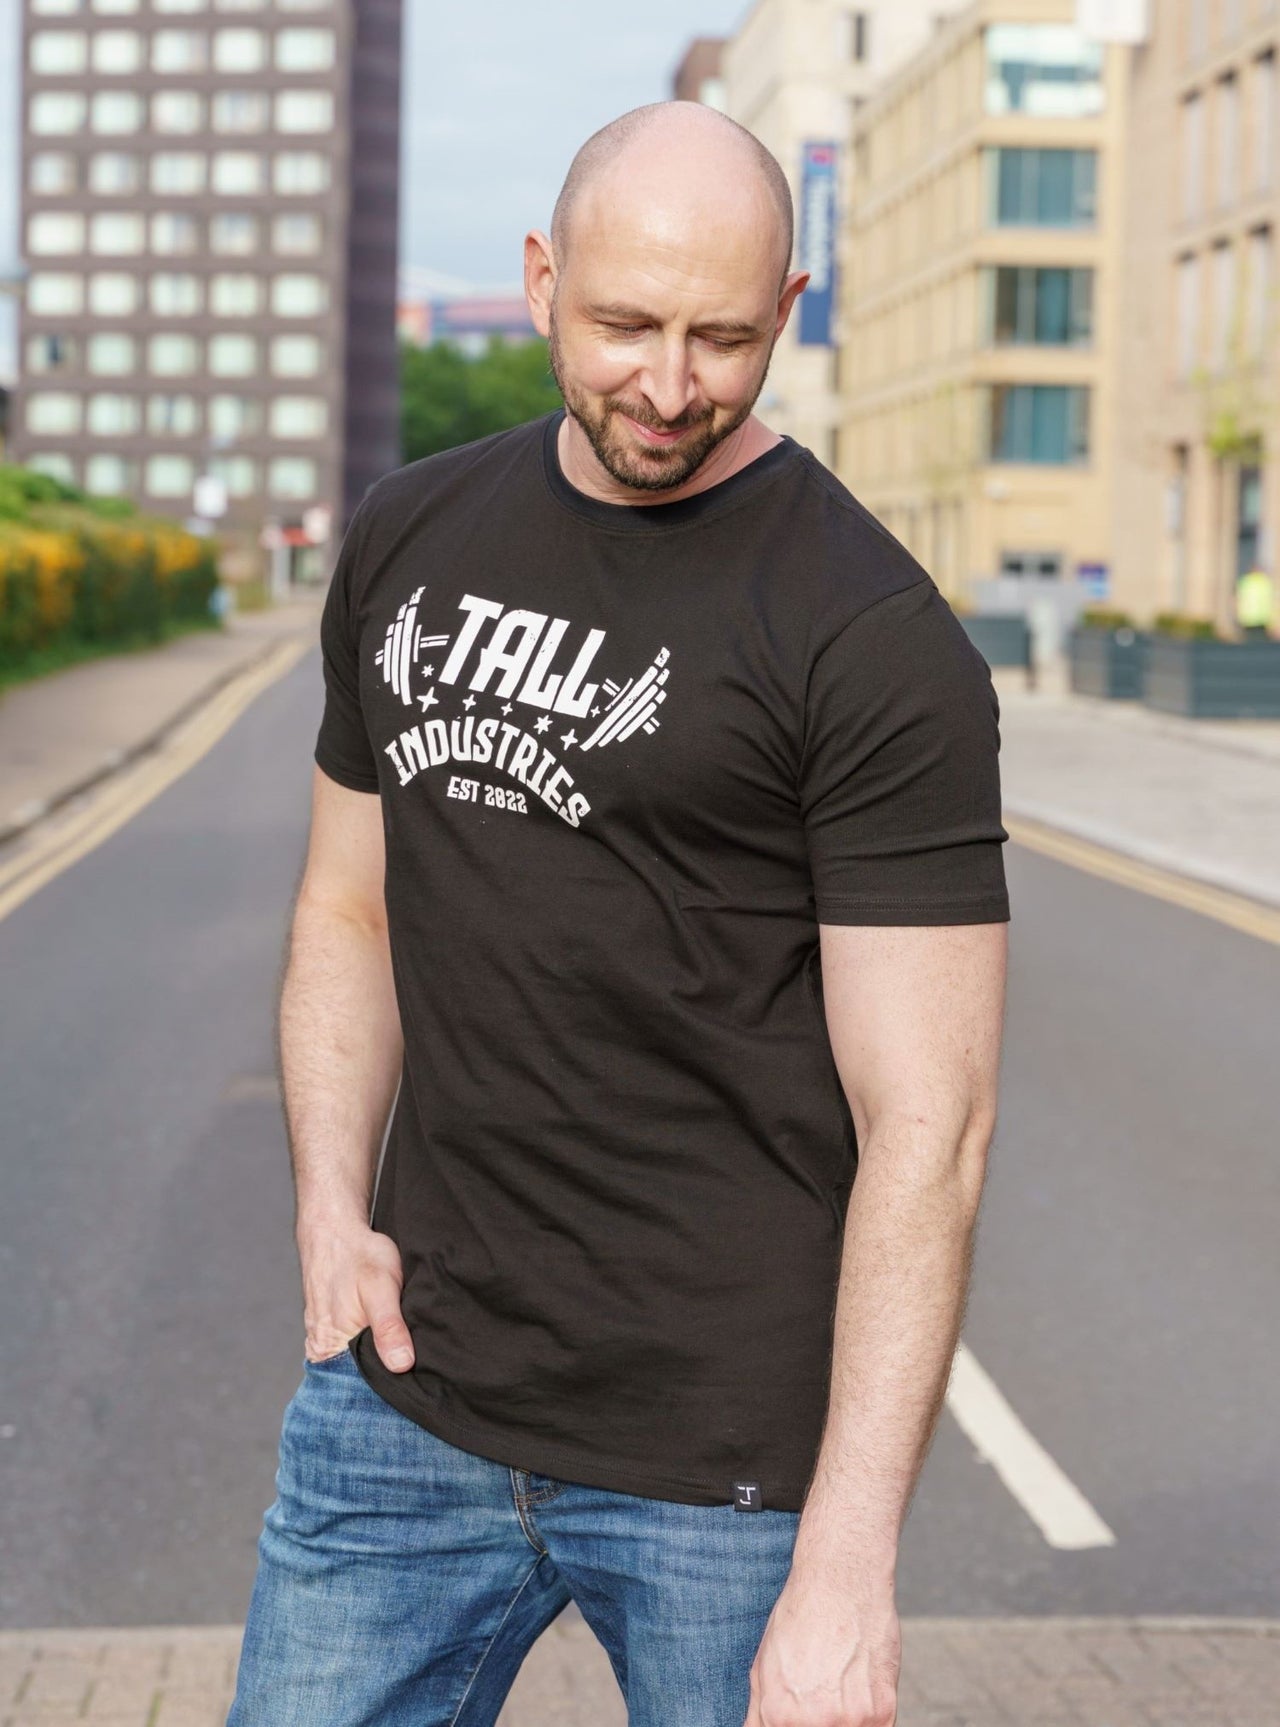 A tall skinny guy wearing a tall black slim t-shirt.